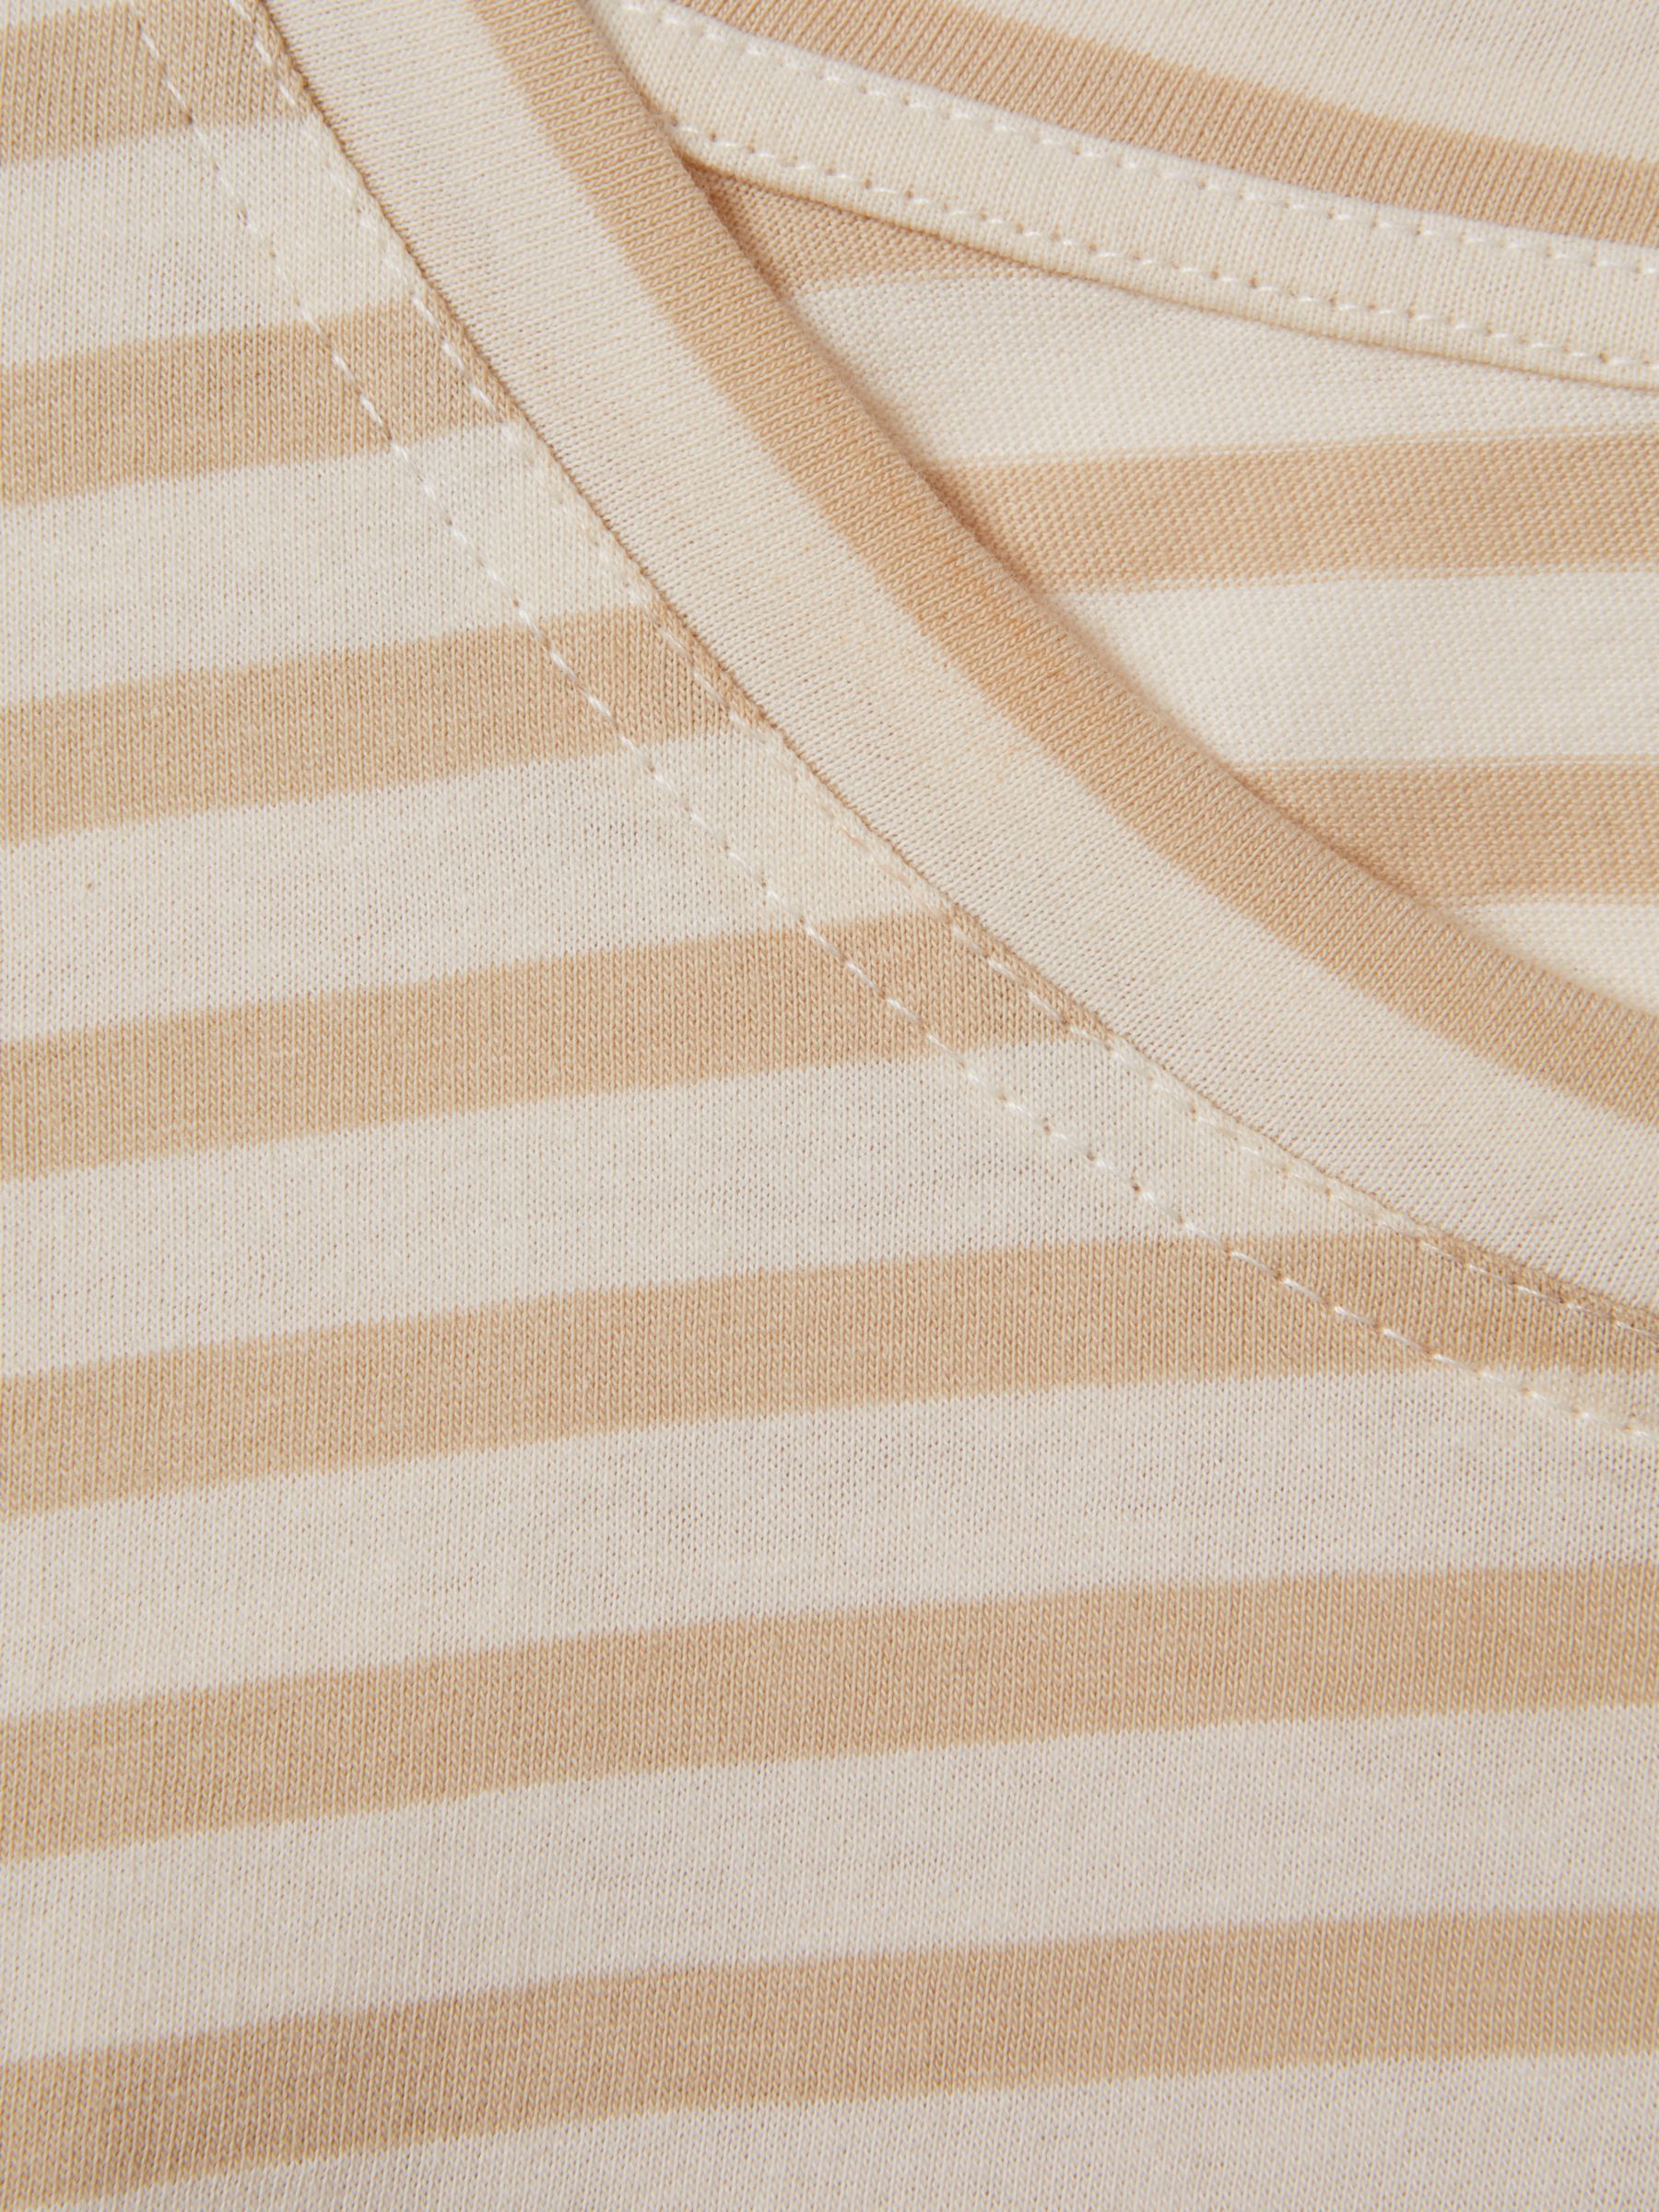 Buy Reiss Morgan Striped Cap Sleeve T-Shirt, Neutral/White Online at johnlewis.com